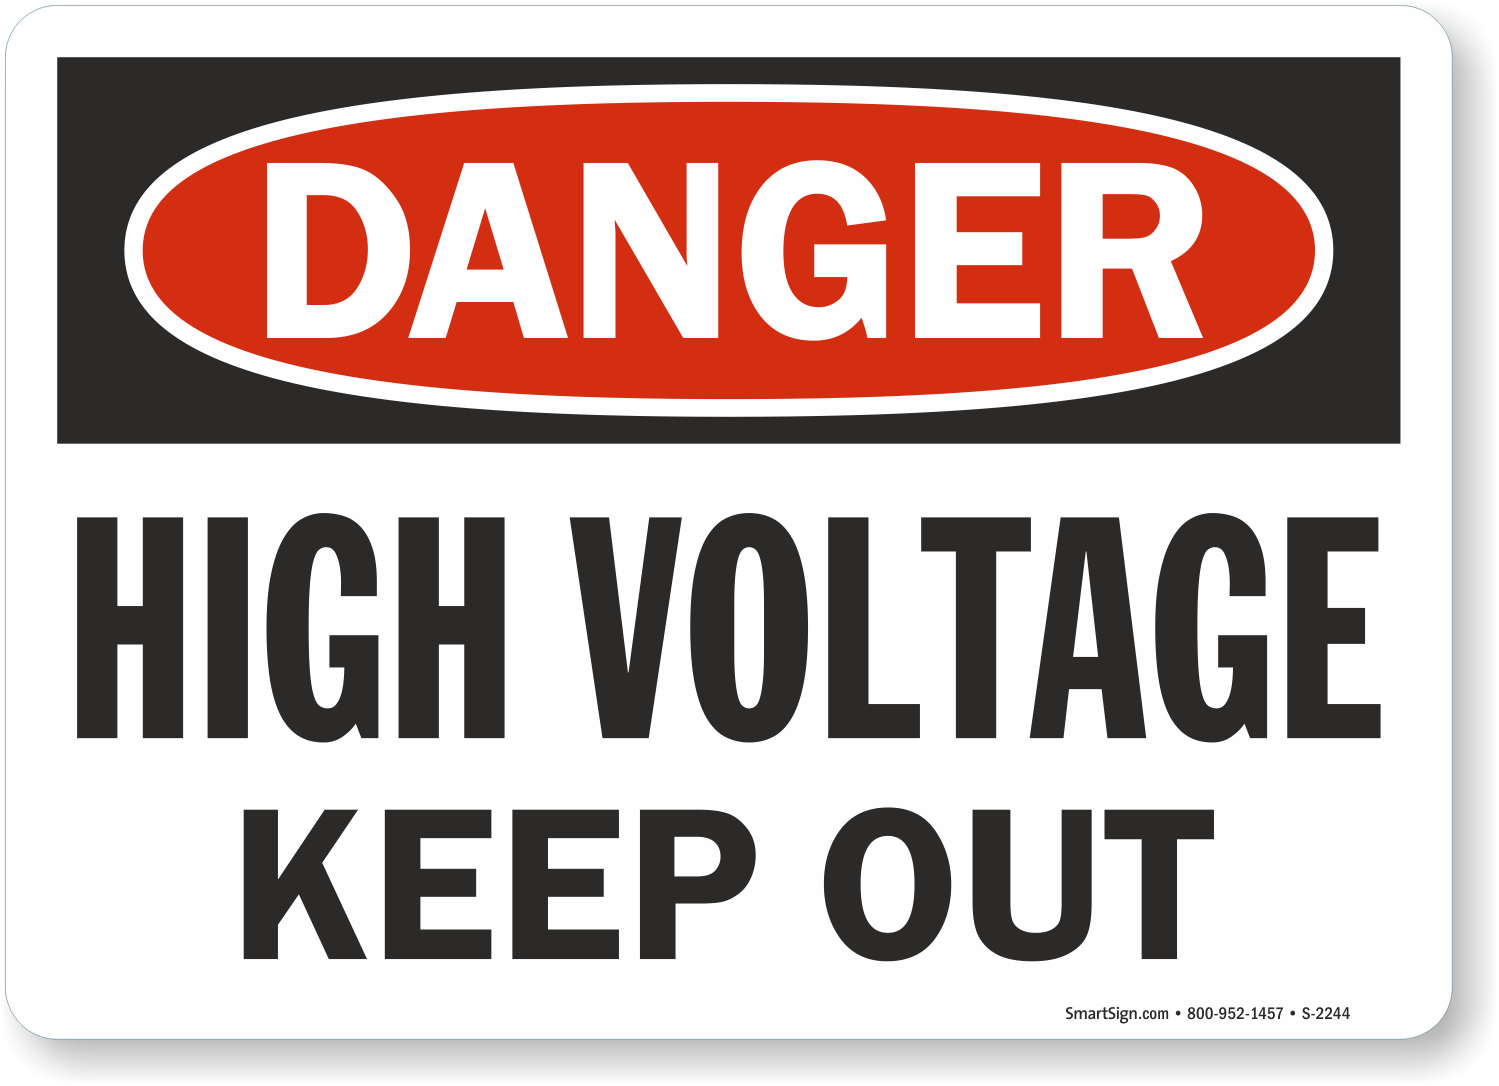 Danger High Voltage Keep Out Sign